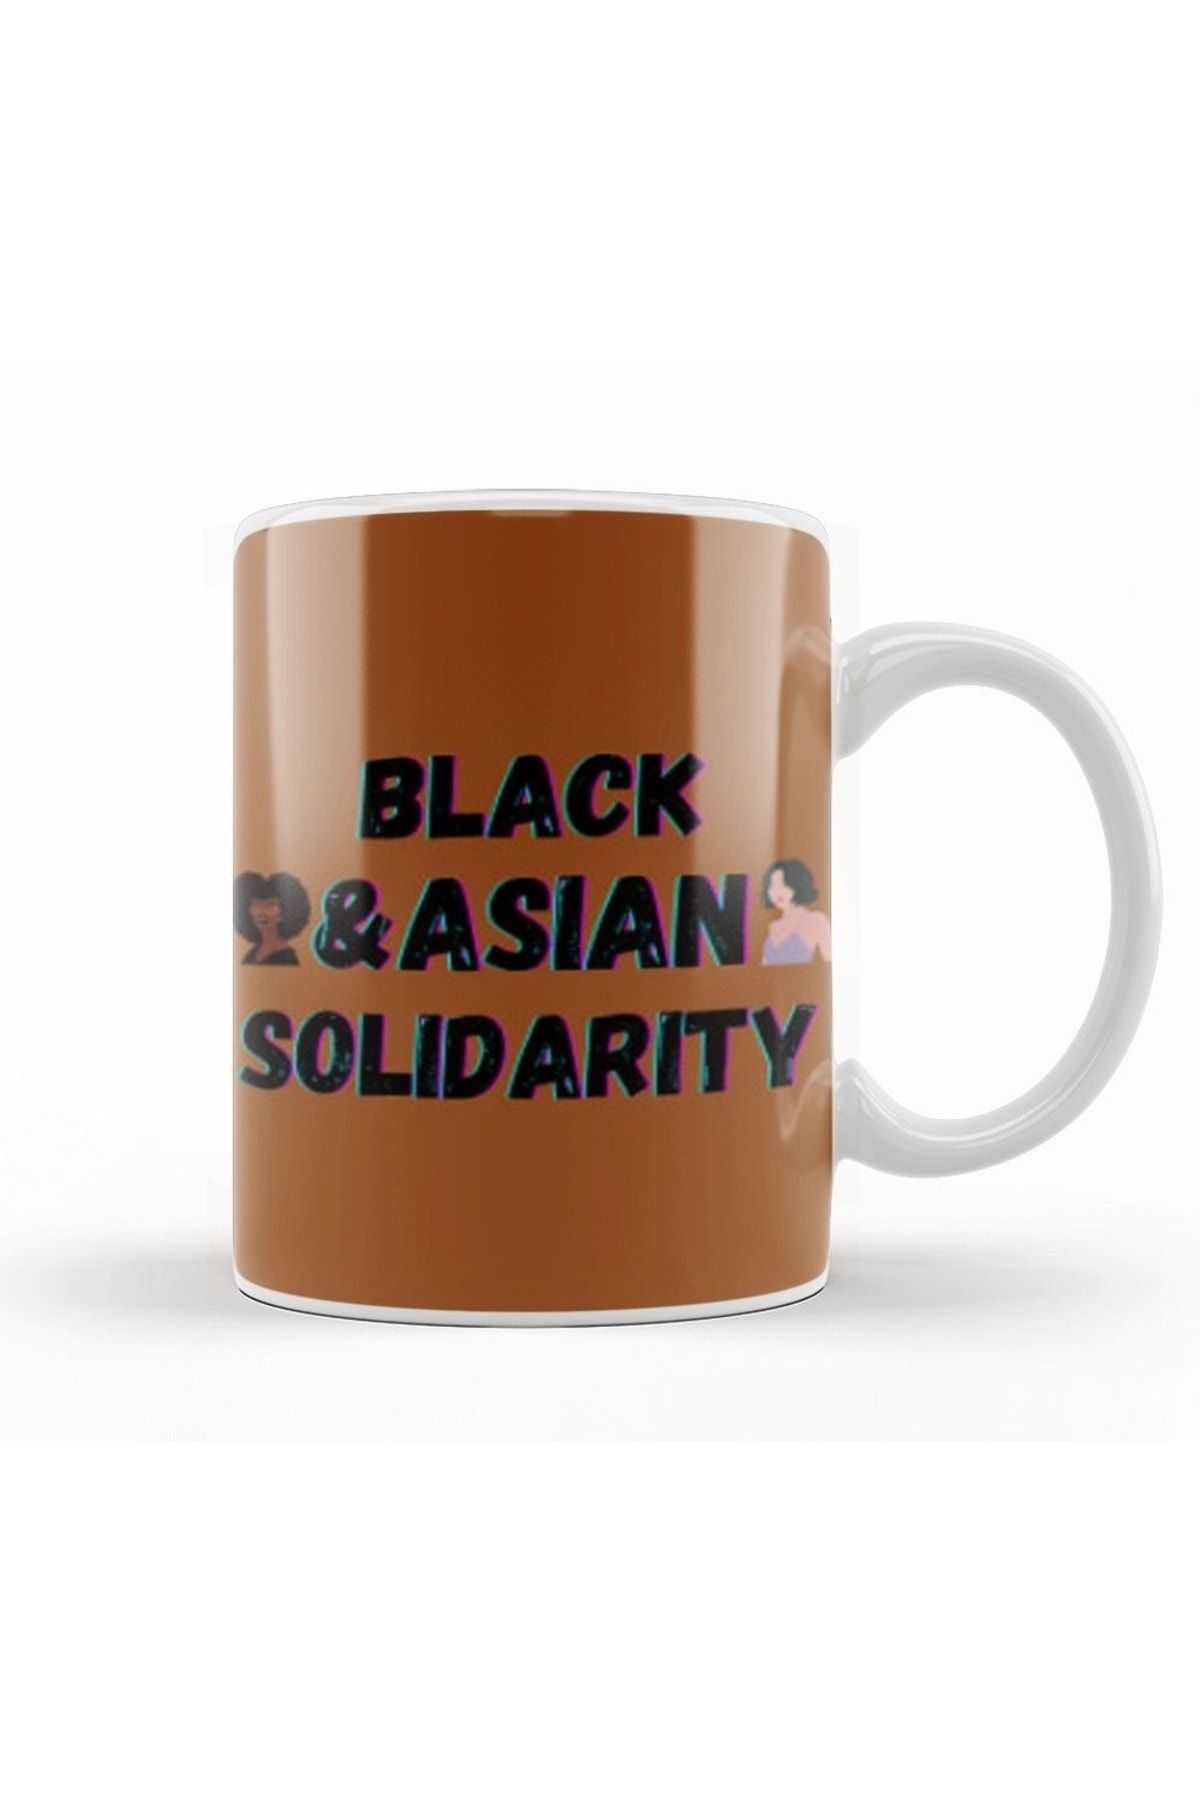 Humuts Black Asian Solidarity Black History Month Blm Black Lives Matter Kupa Bardak Porselen